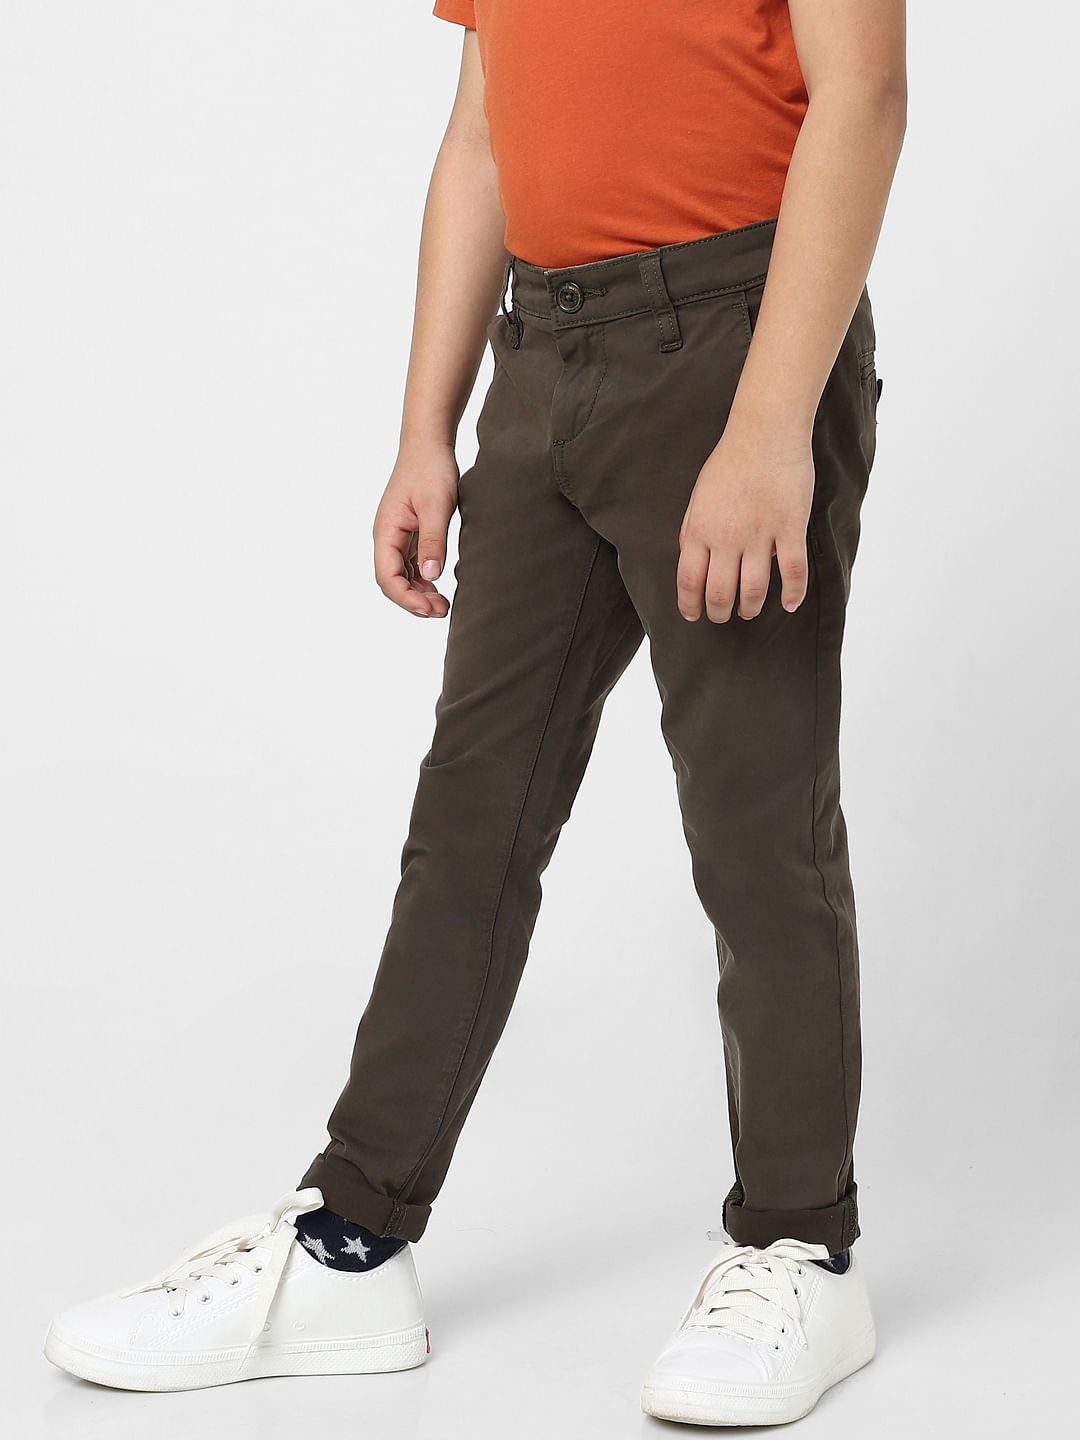 Art Class Boys' Brown Glazed Ginger Chino Skinny Pants Size 5 NWT Free Ship  | eBay